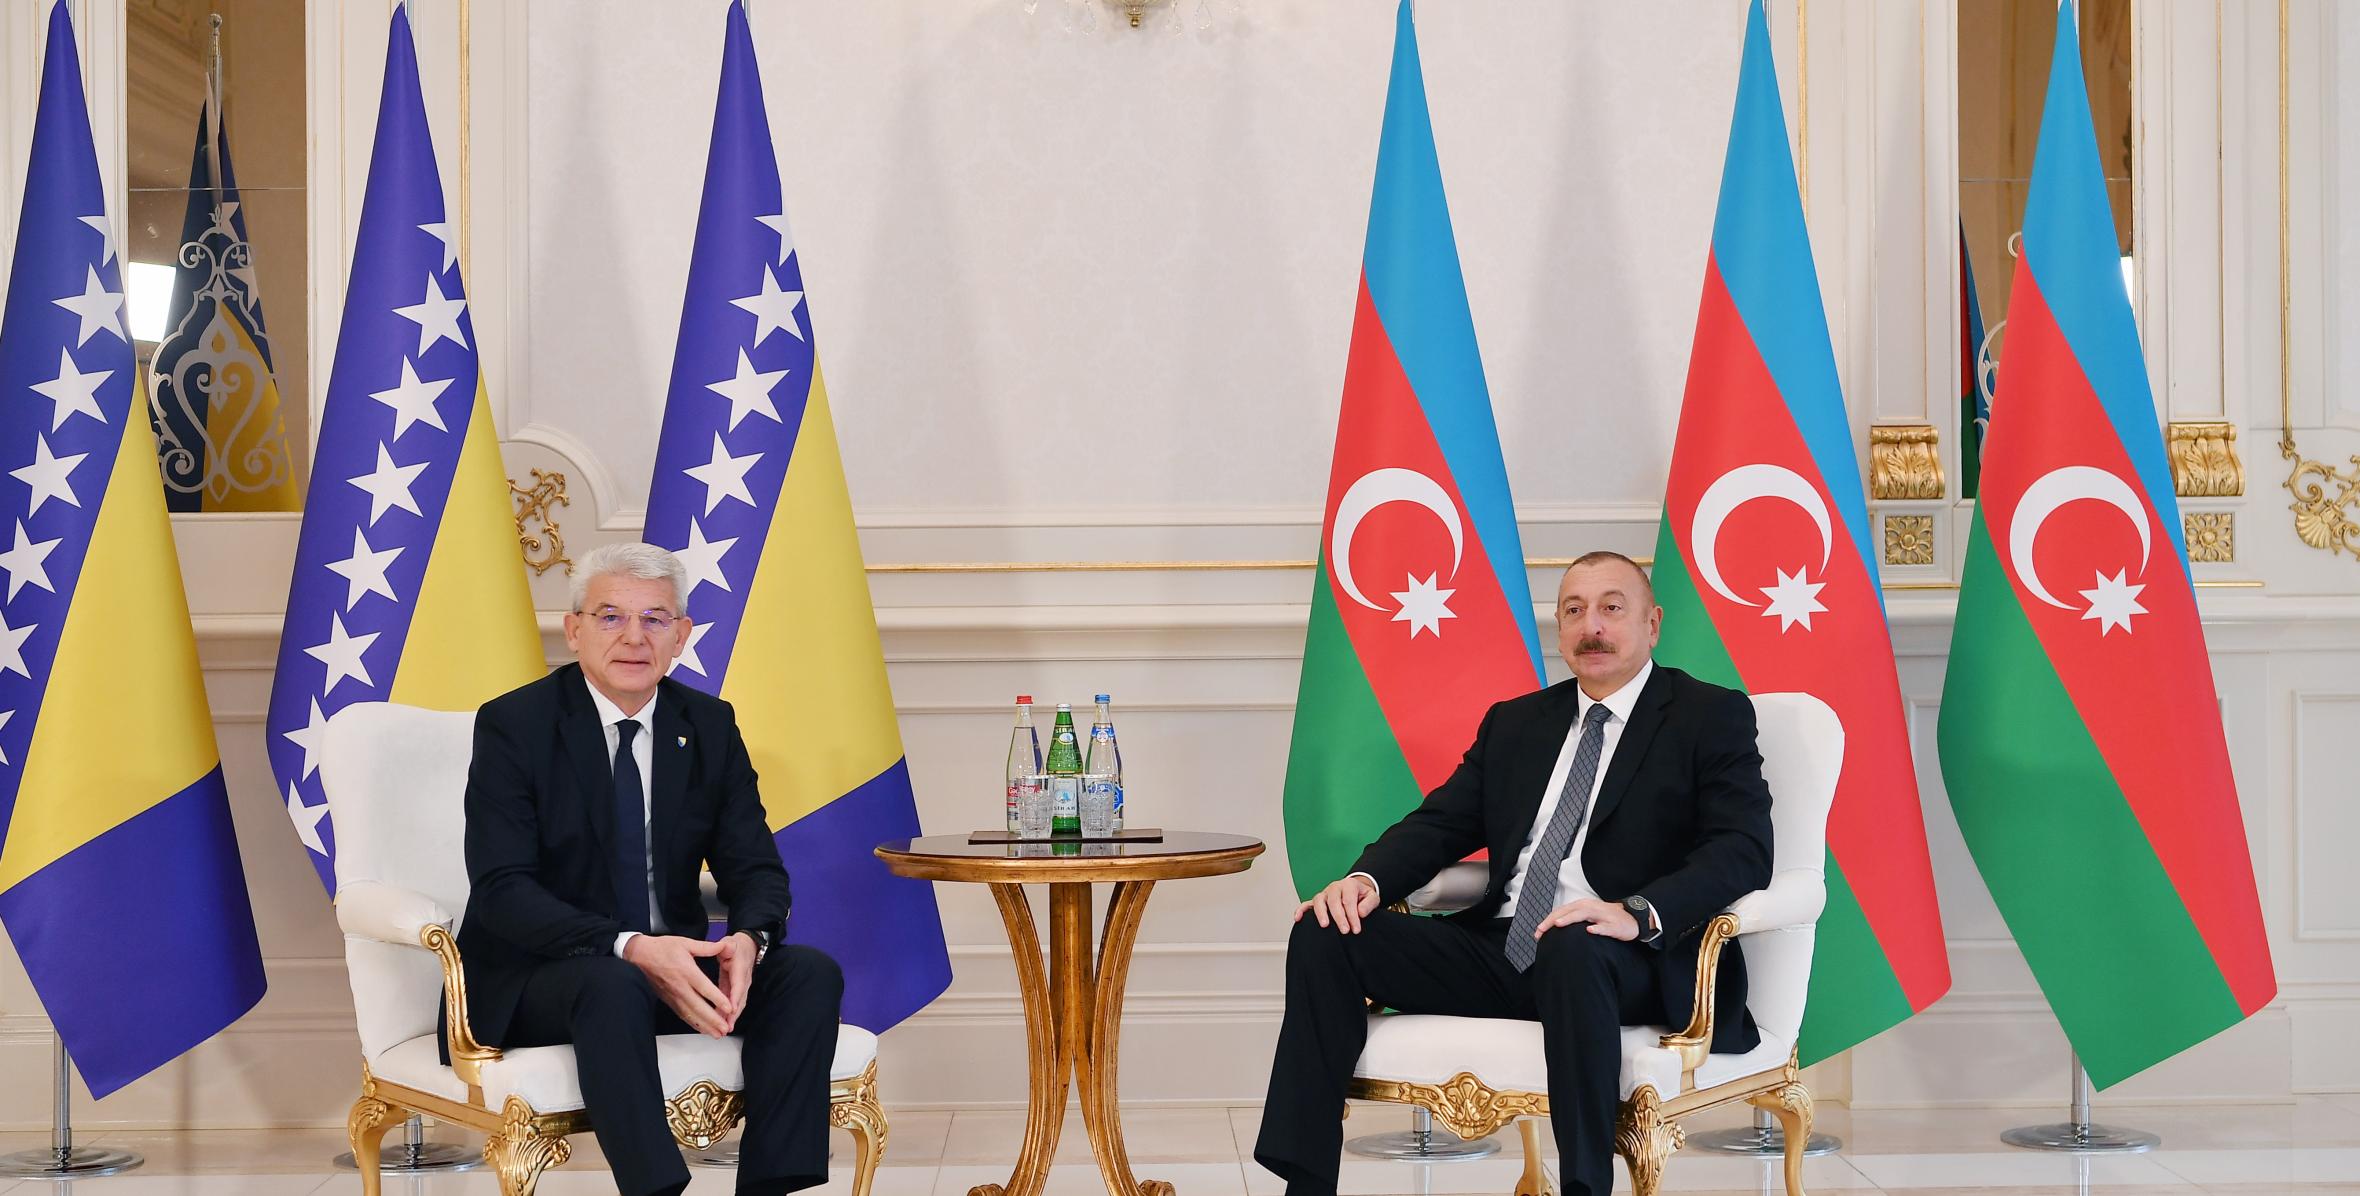 Ilham Aliyev met with Member of Presidency of Bosnia and Herzegovina Sefik Dzaferovic